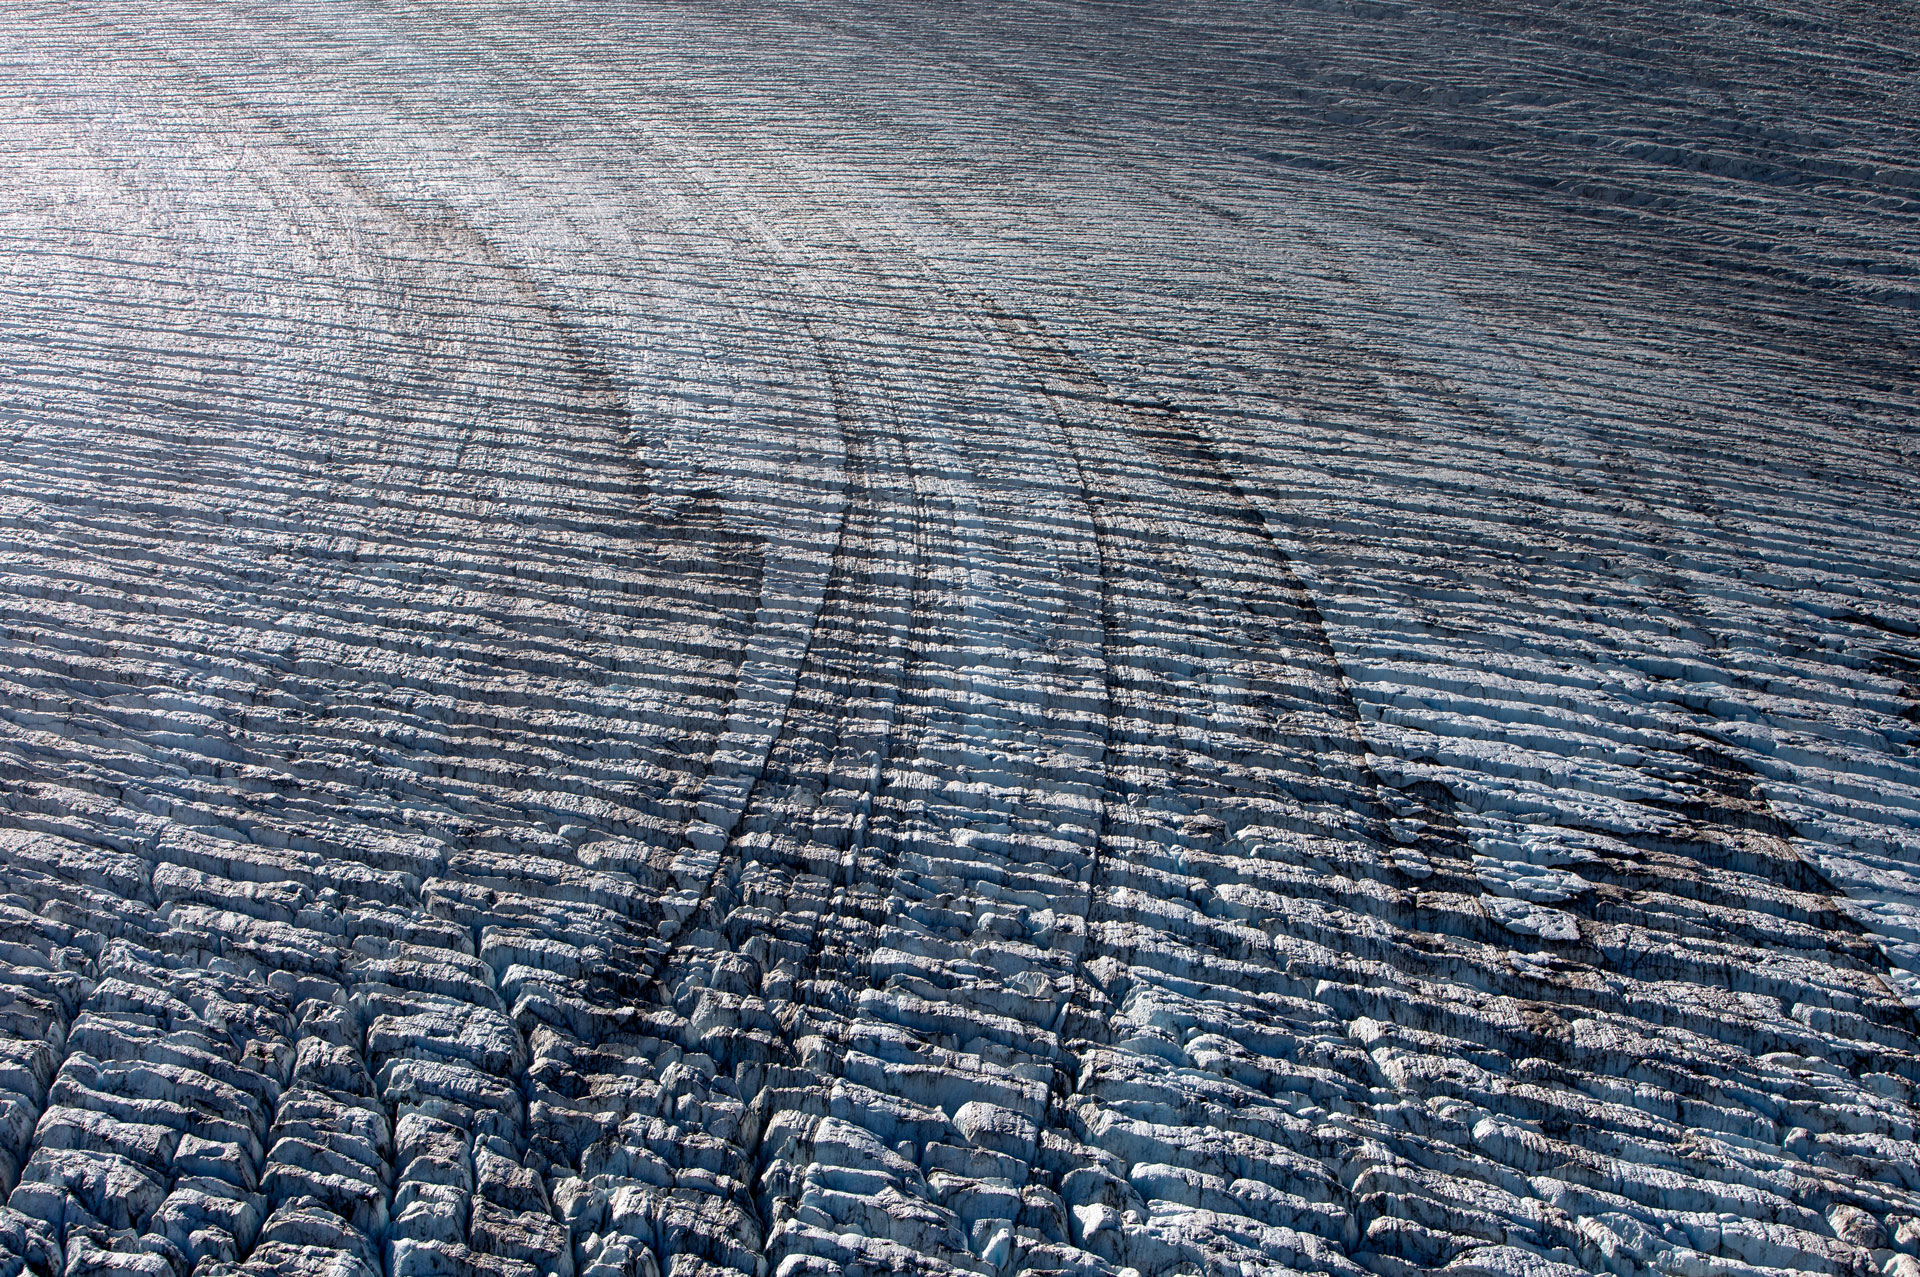 Joe-Yelverton-Icefields-to-Oceans-MSR-blog-ice